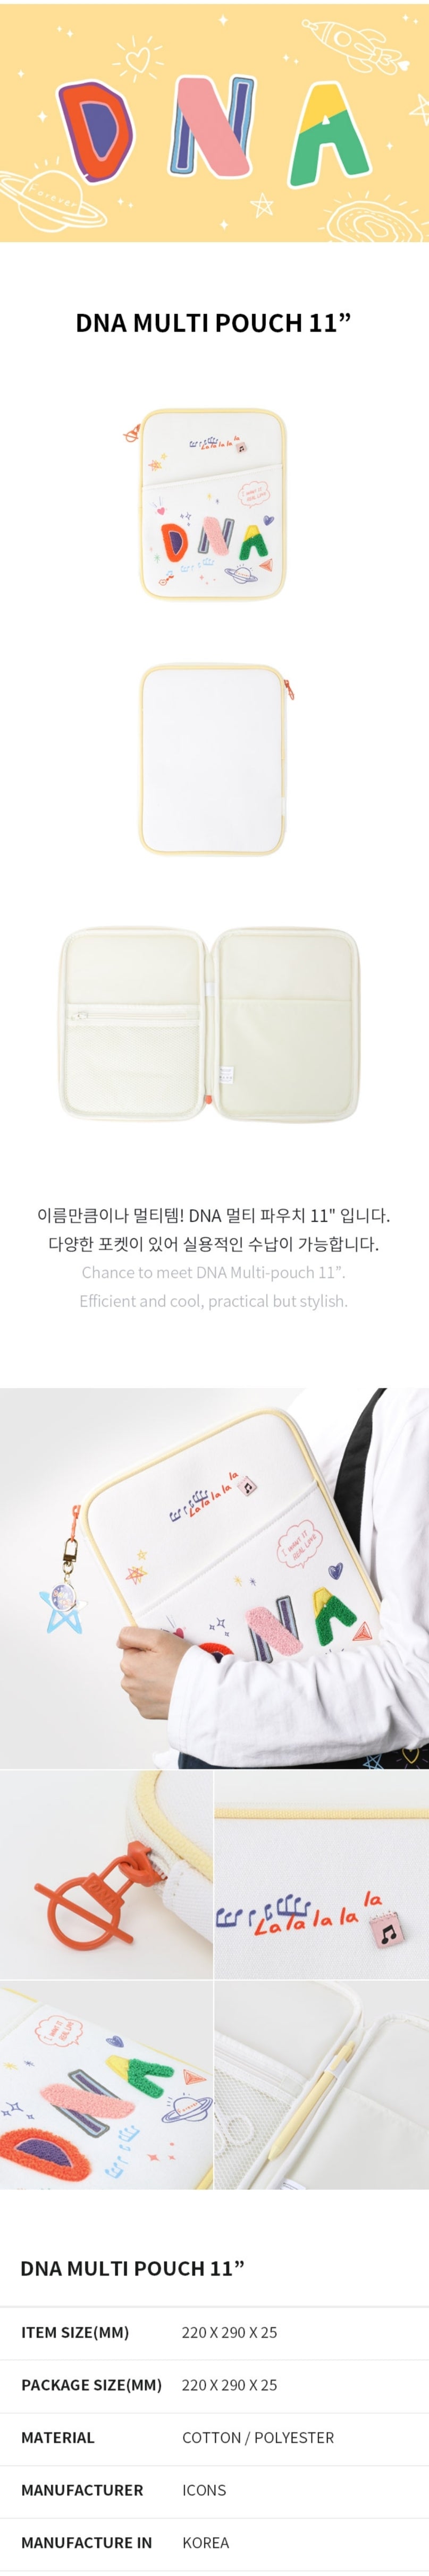 DNA-Multibeutel 11"